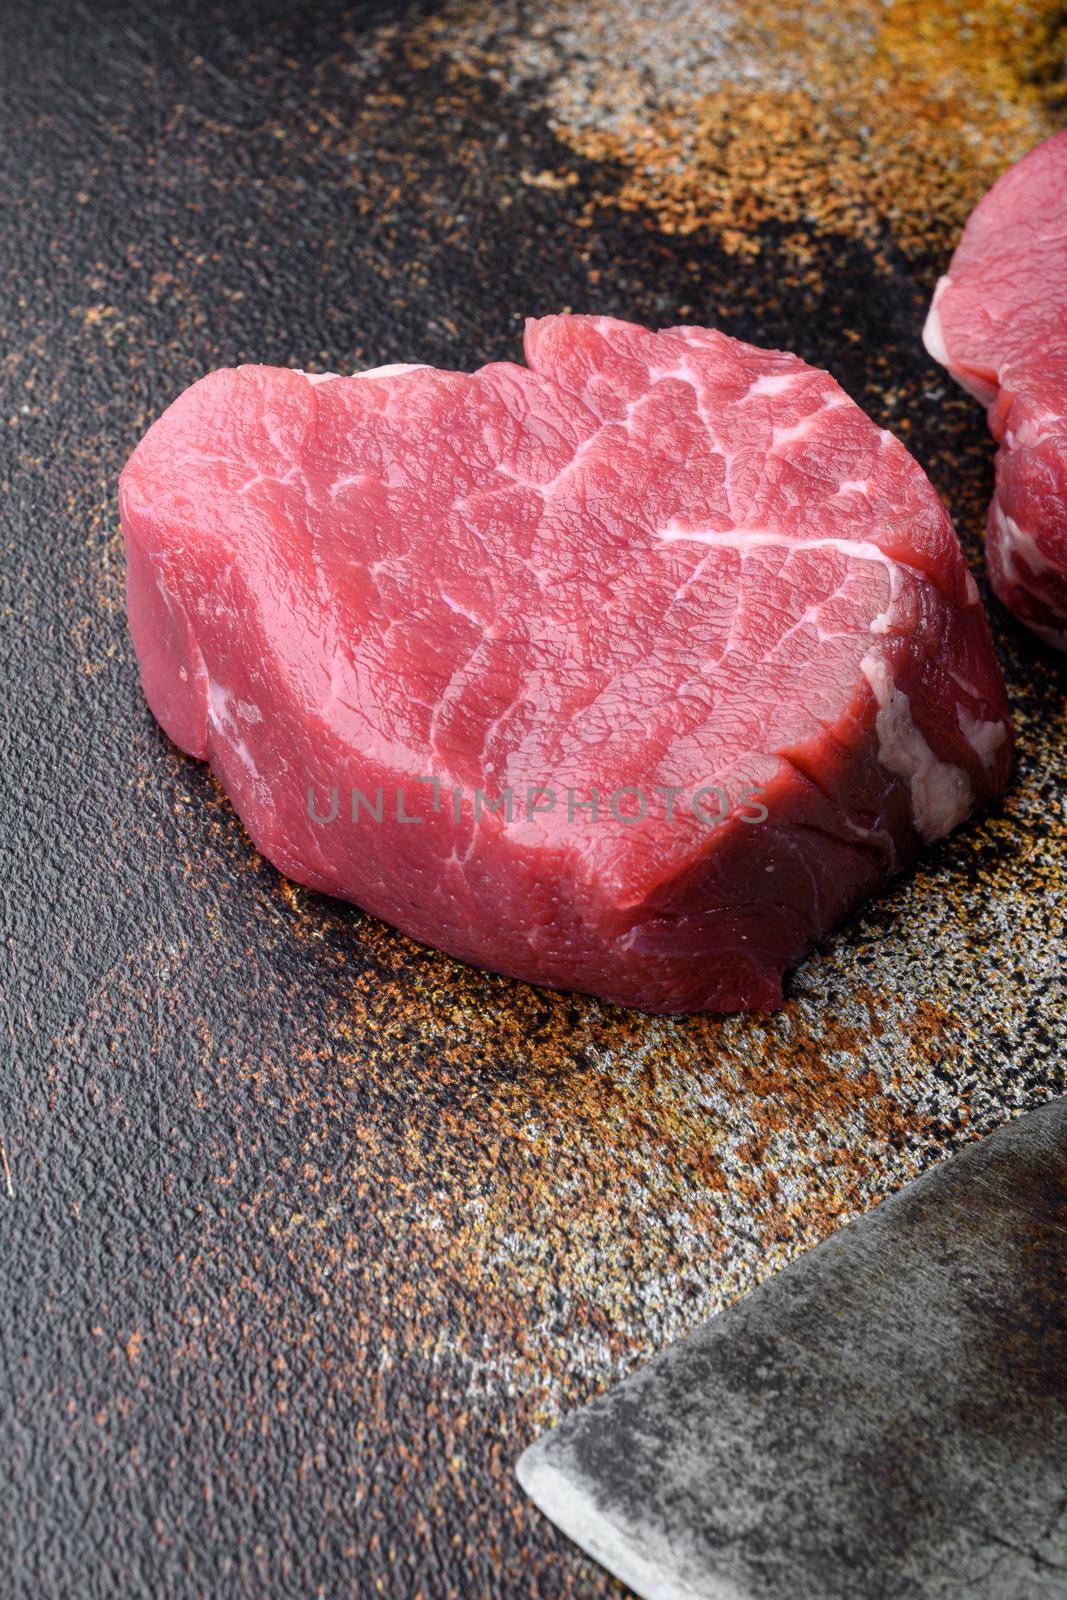 Fillet mignon steak raw set, on old dark rustic background